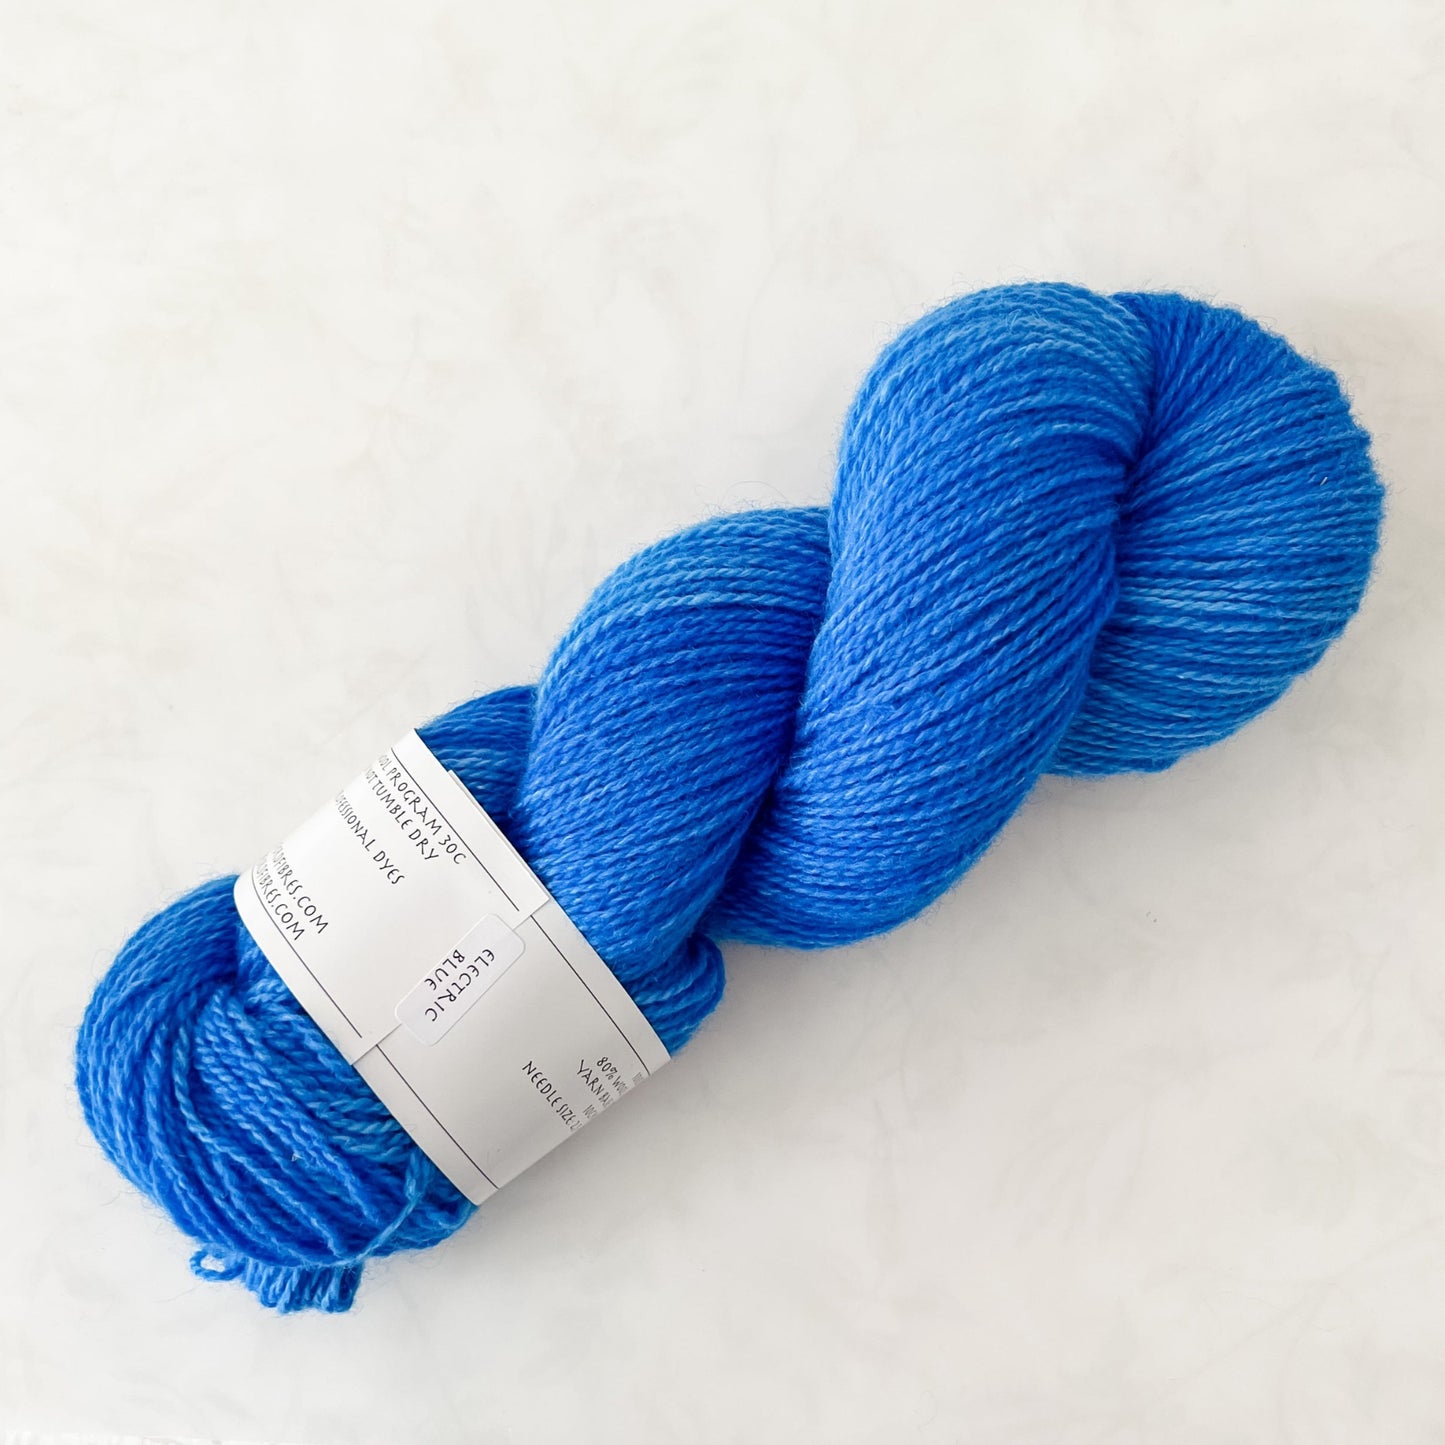 Electric Blue - Trollfjord sock - Hand Dyed Yarn - Variegated Yarn